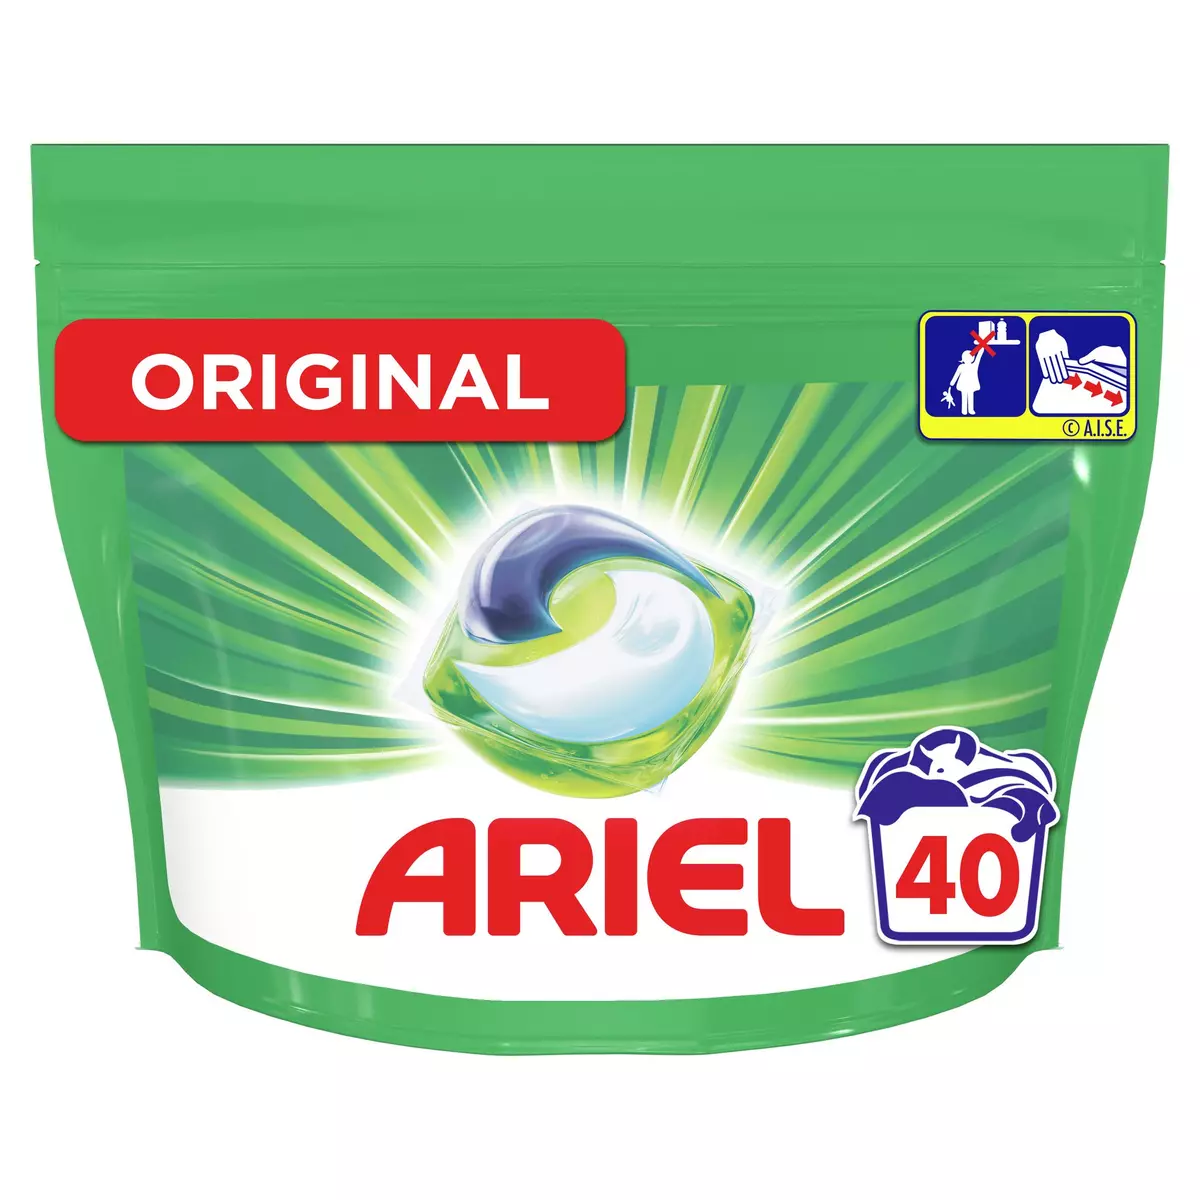 ARIEL Pods capsules de lessive tout en 1 original 40 capsules